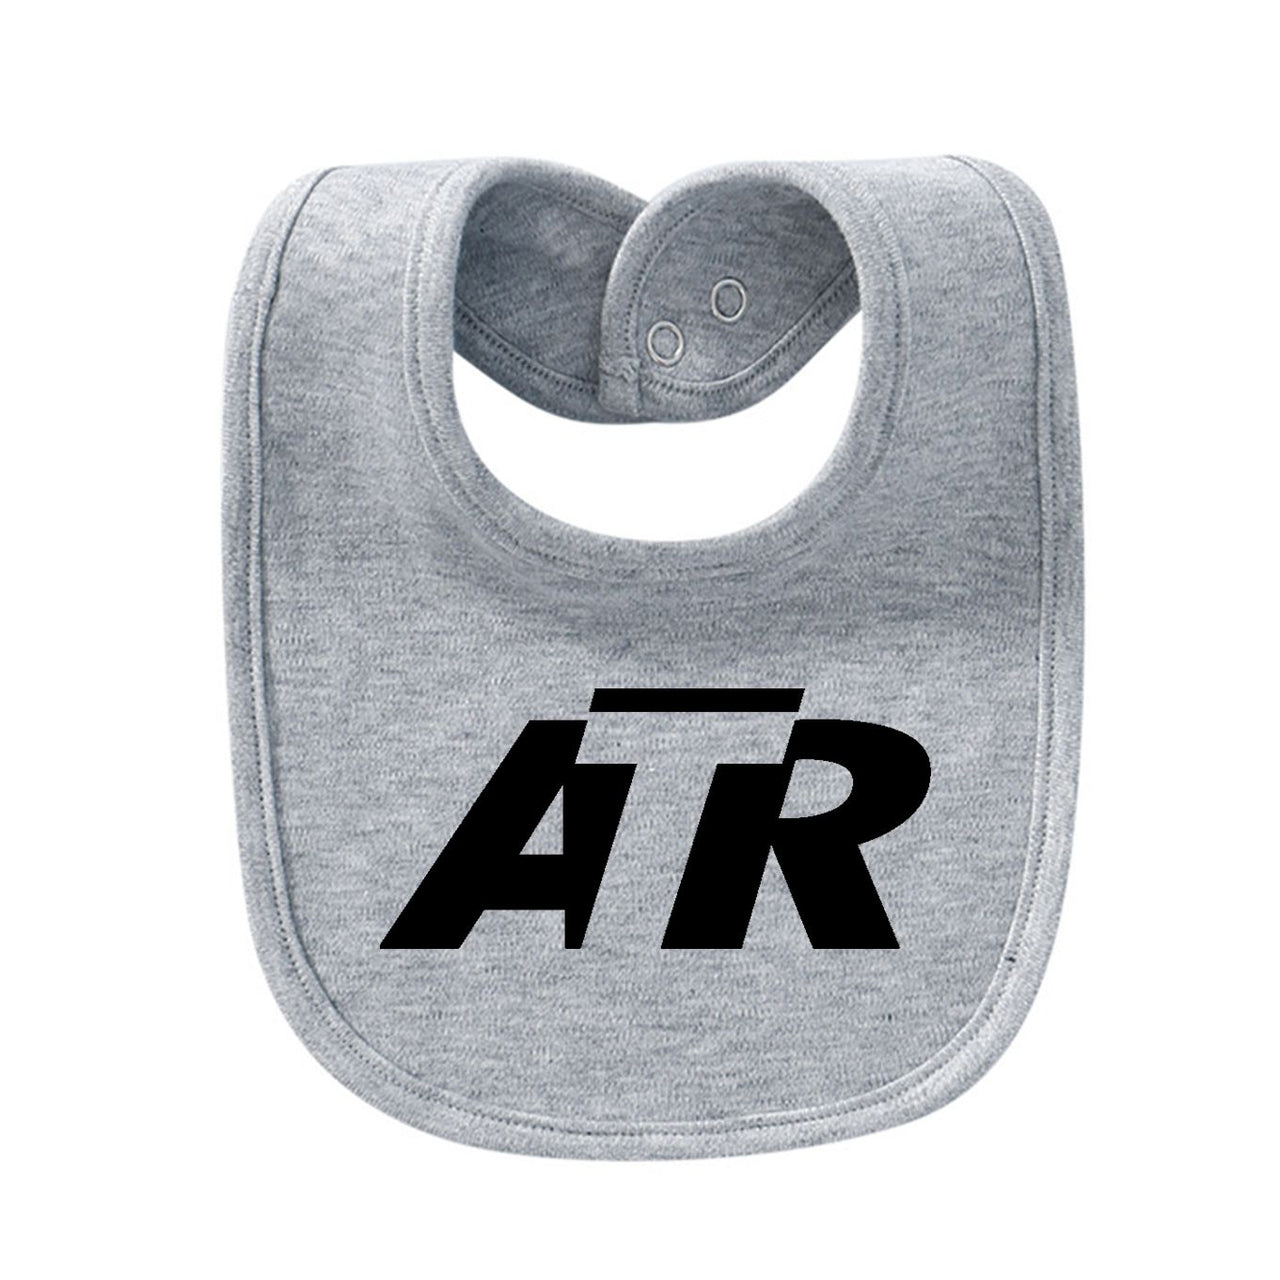 ATR & Text Designed Baby Saliva & Feeding Towels